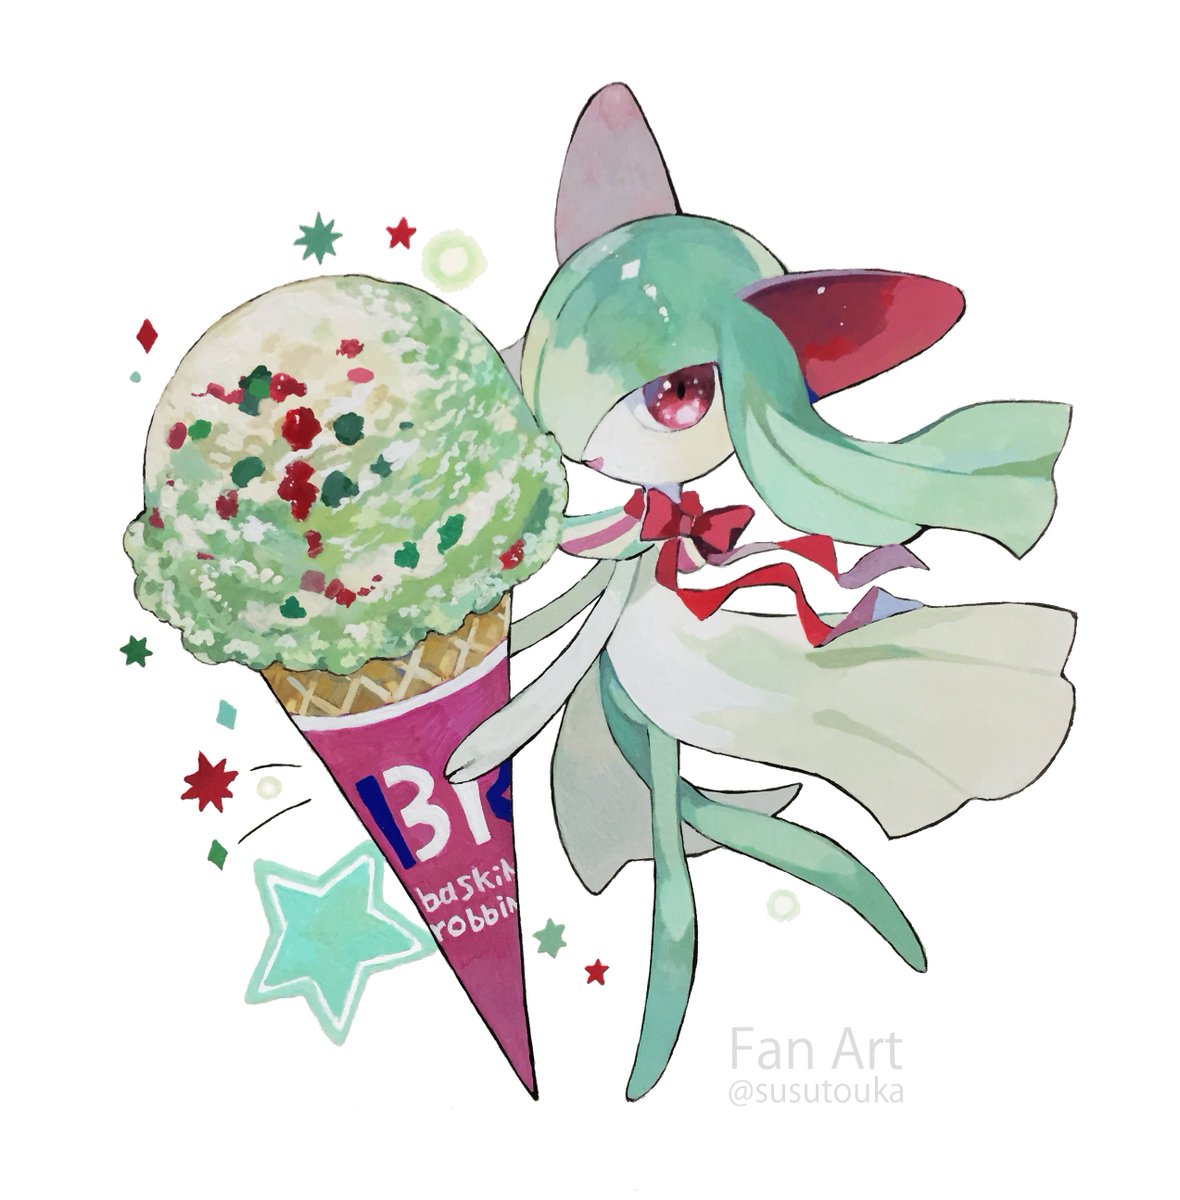 vaporeon pokemon (creature) no humans ice cream food white background holding ice cream cone  illustration images